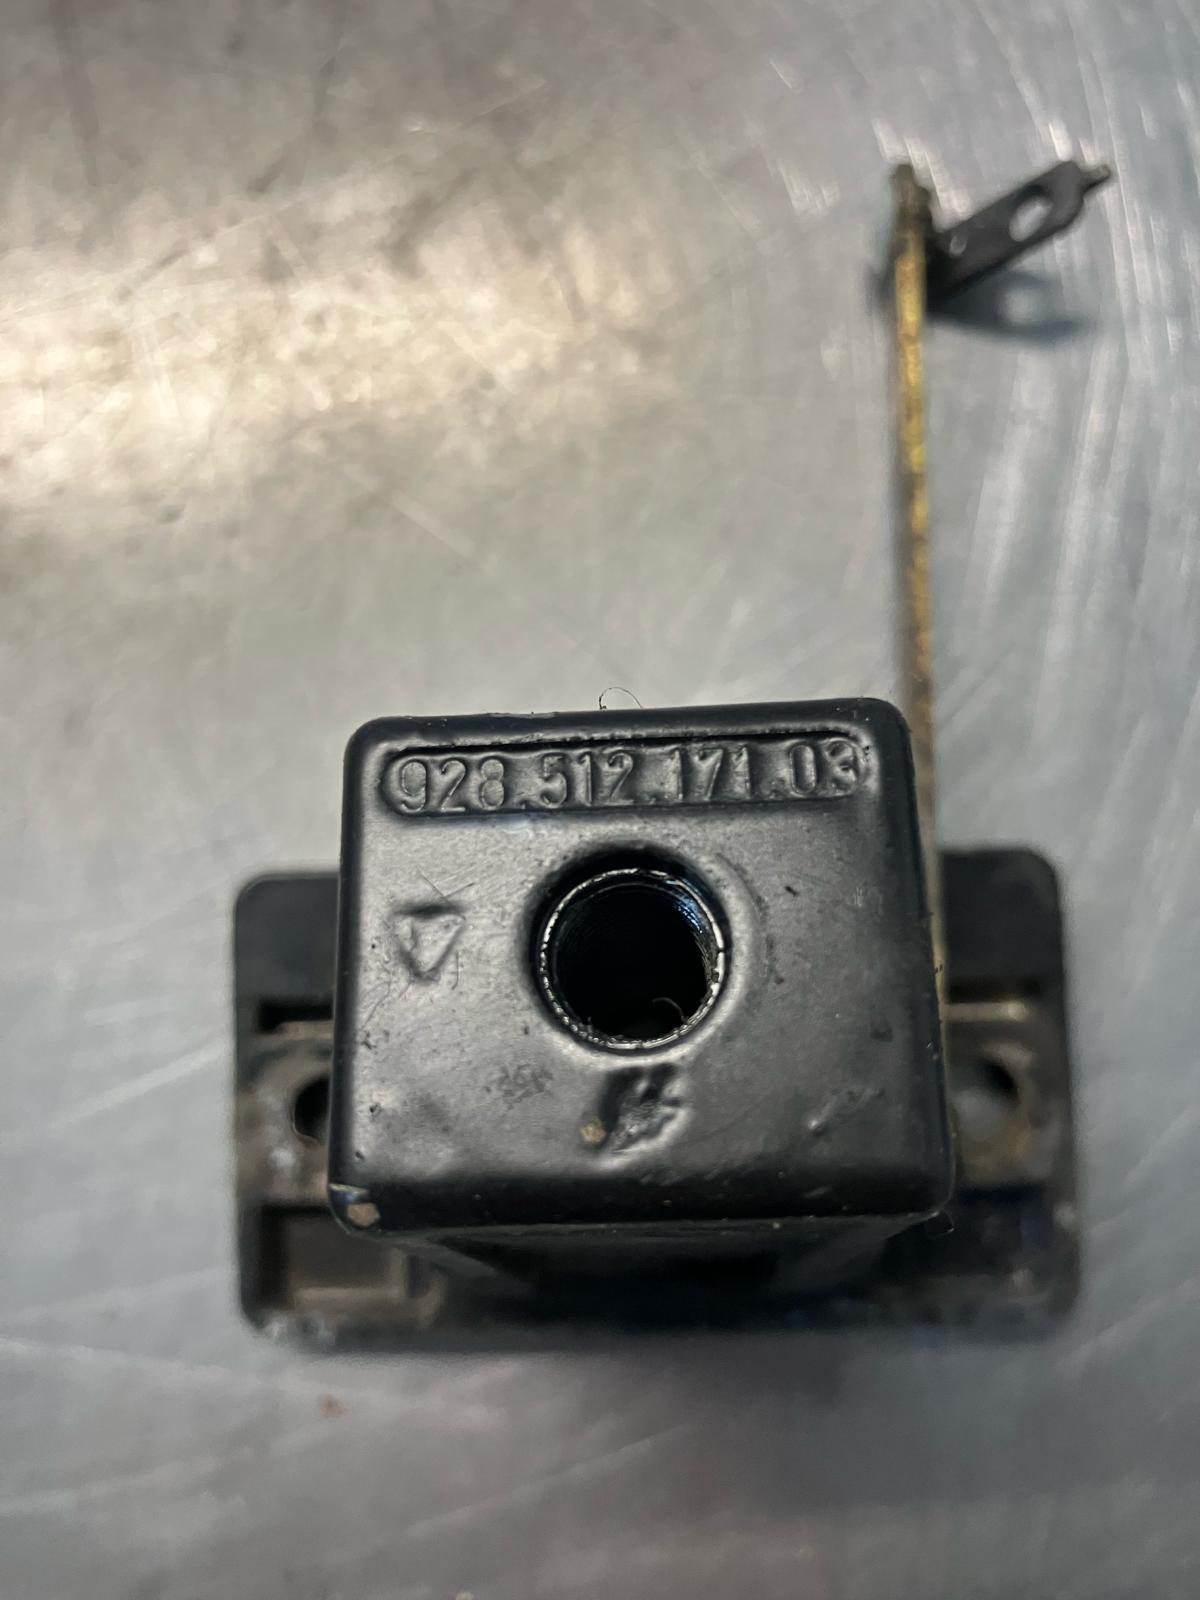 Porsche 928 boot lock receiver, used 92851217103